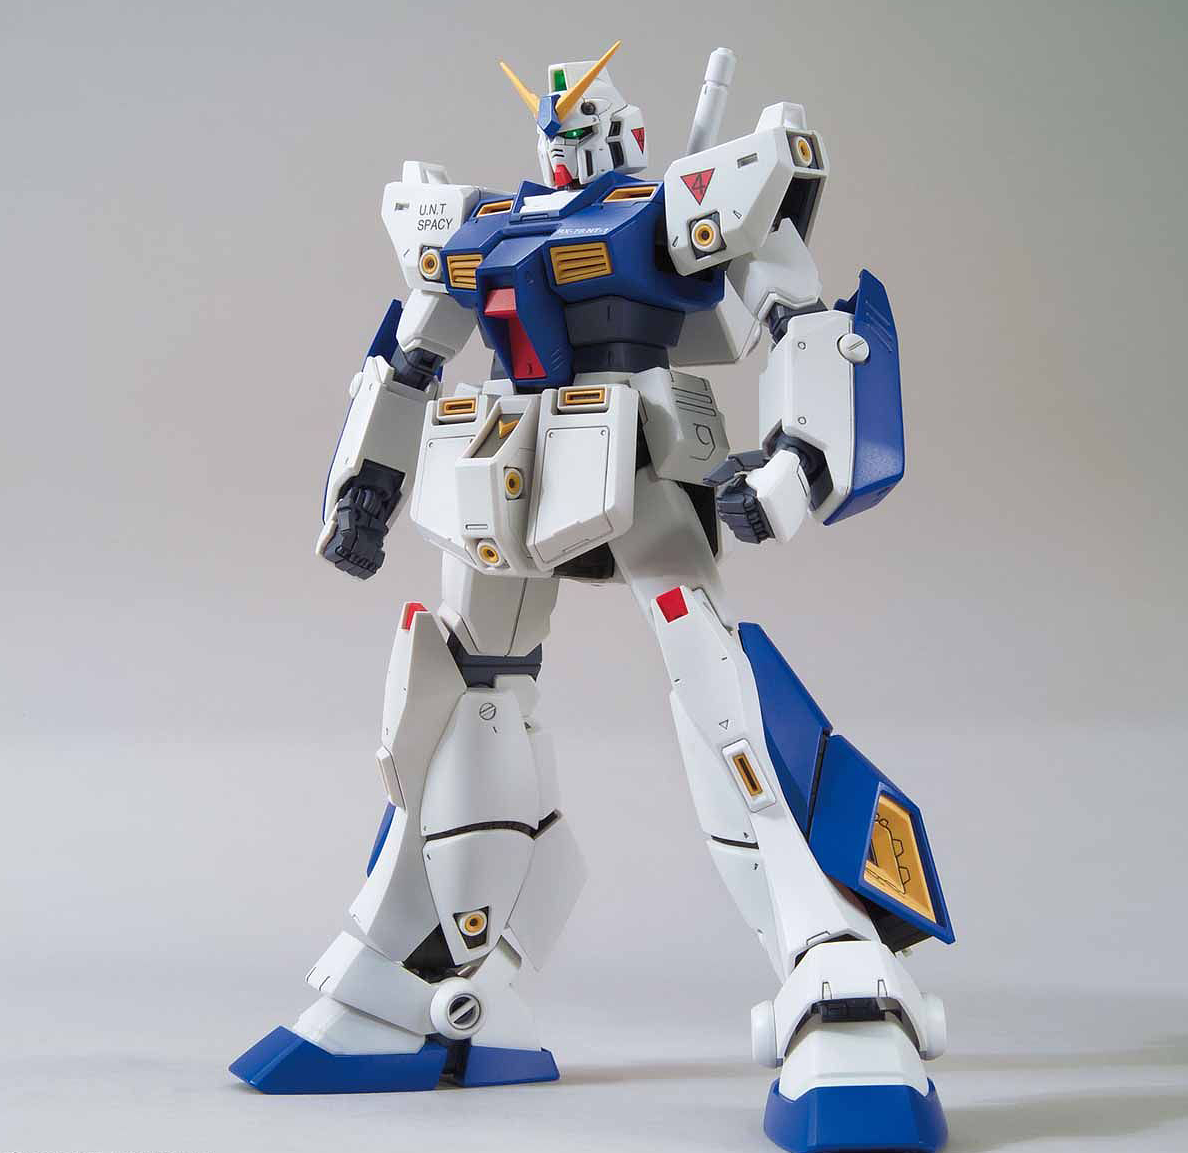 Gundam 1/100 MG 0080: War in the Pocket RX-78NT-1 Gundam NT-1 Alex Ver. 2.0 Model Kit